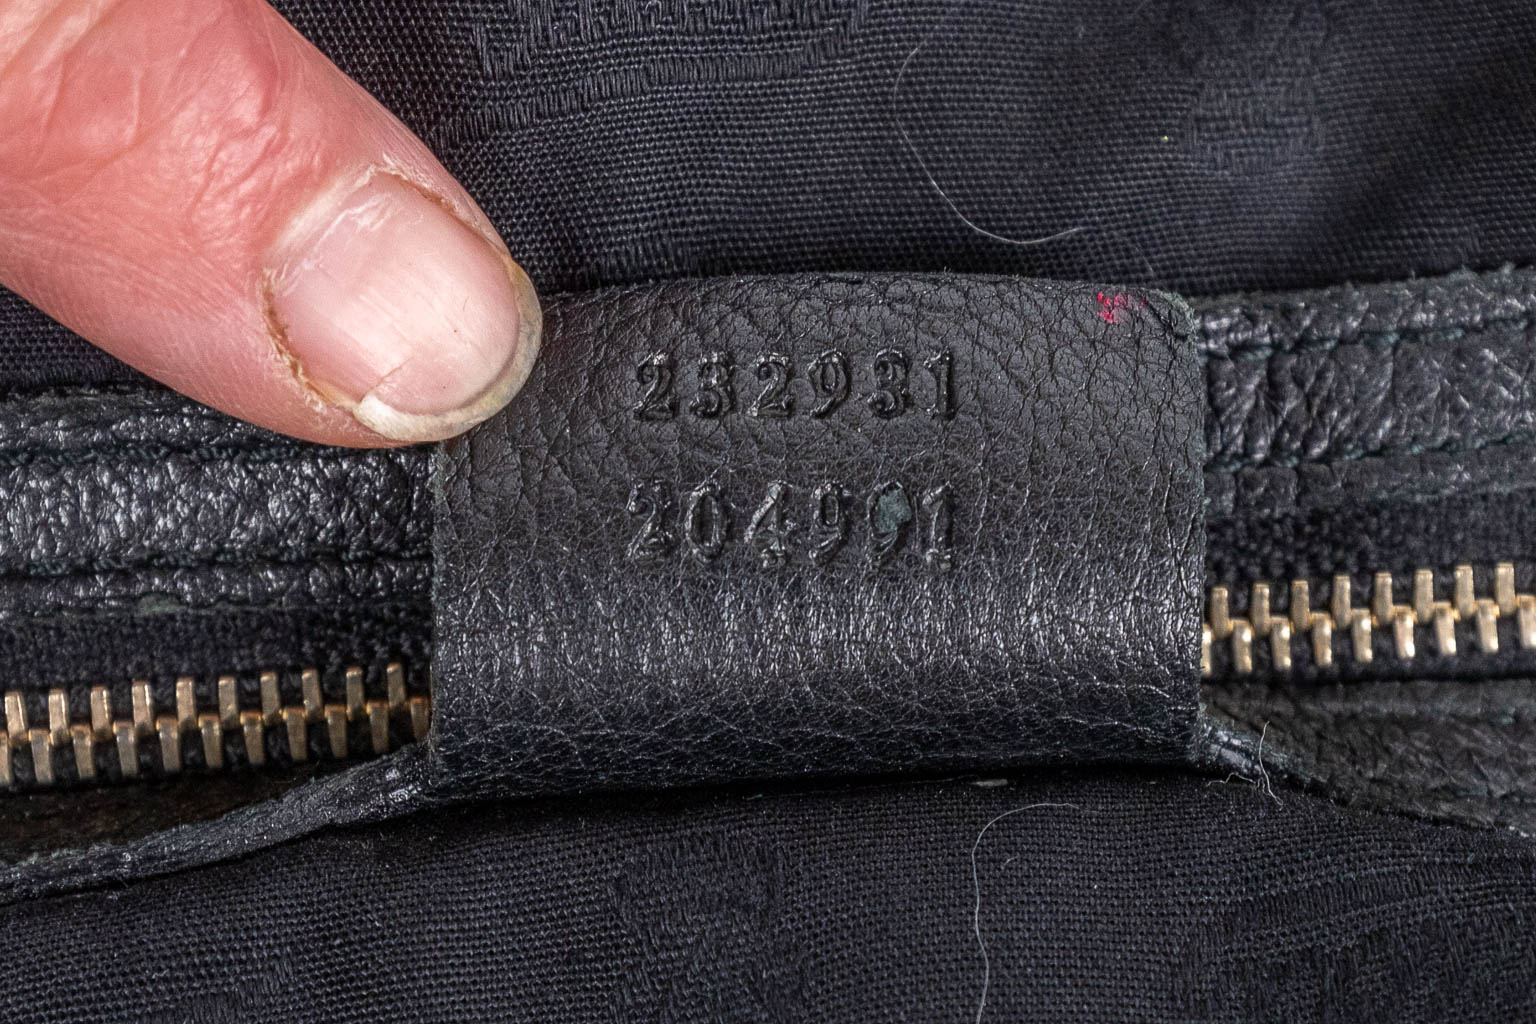 Gucci, a handbag made of black leather, with original belt. (W:40 x H:35 cm)